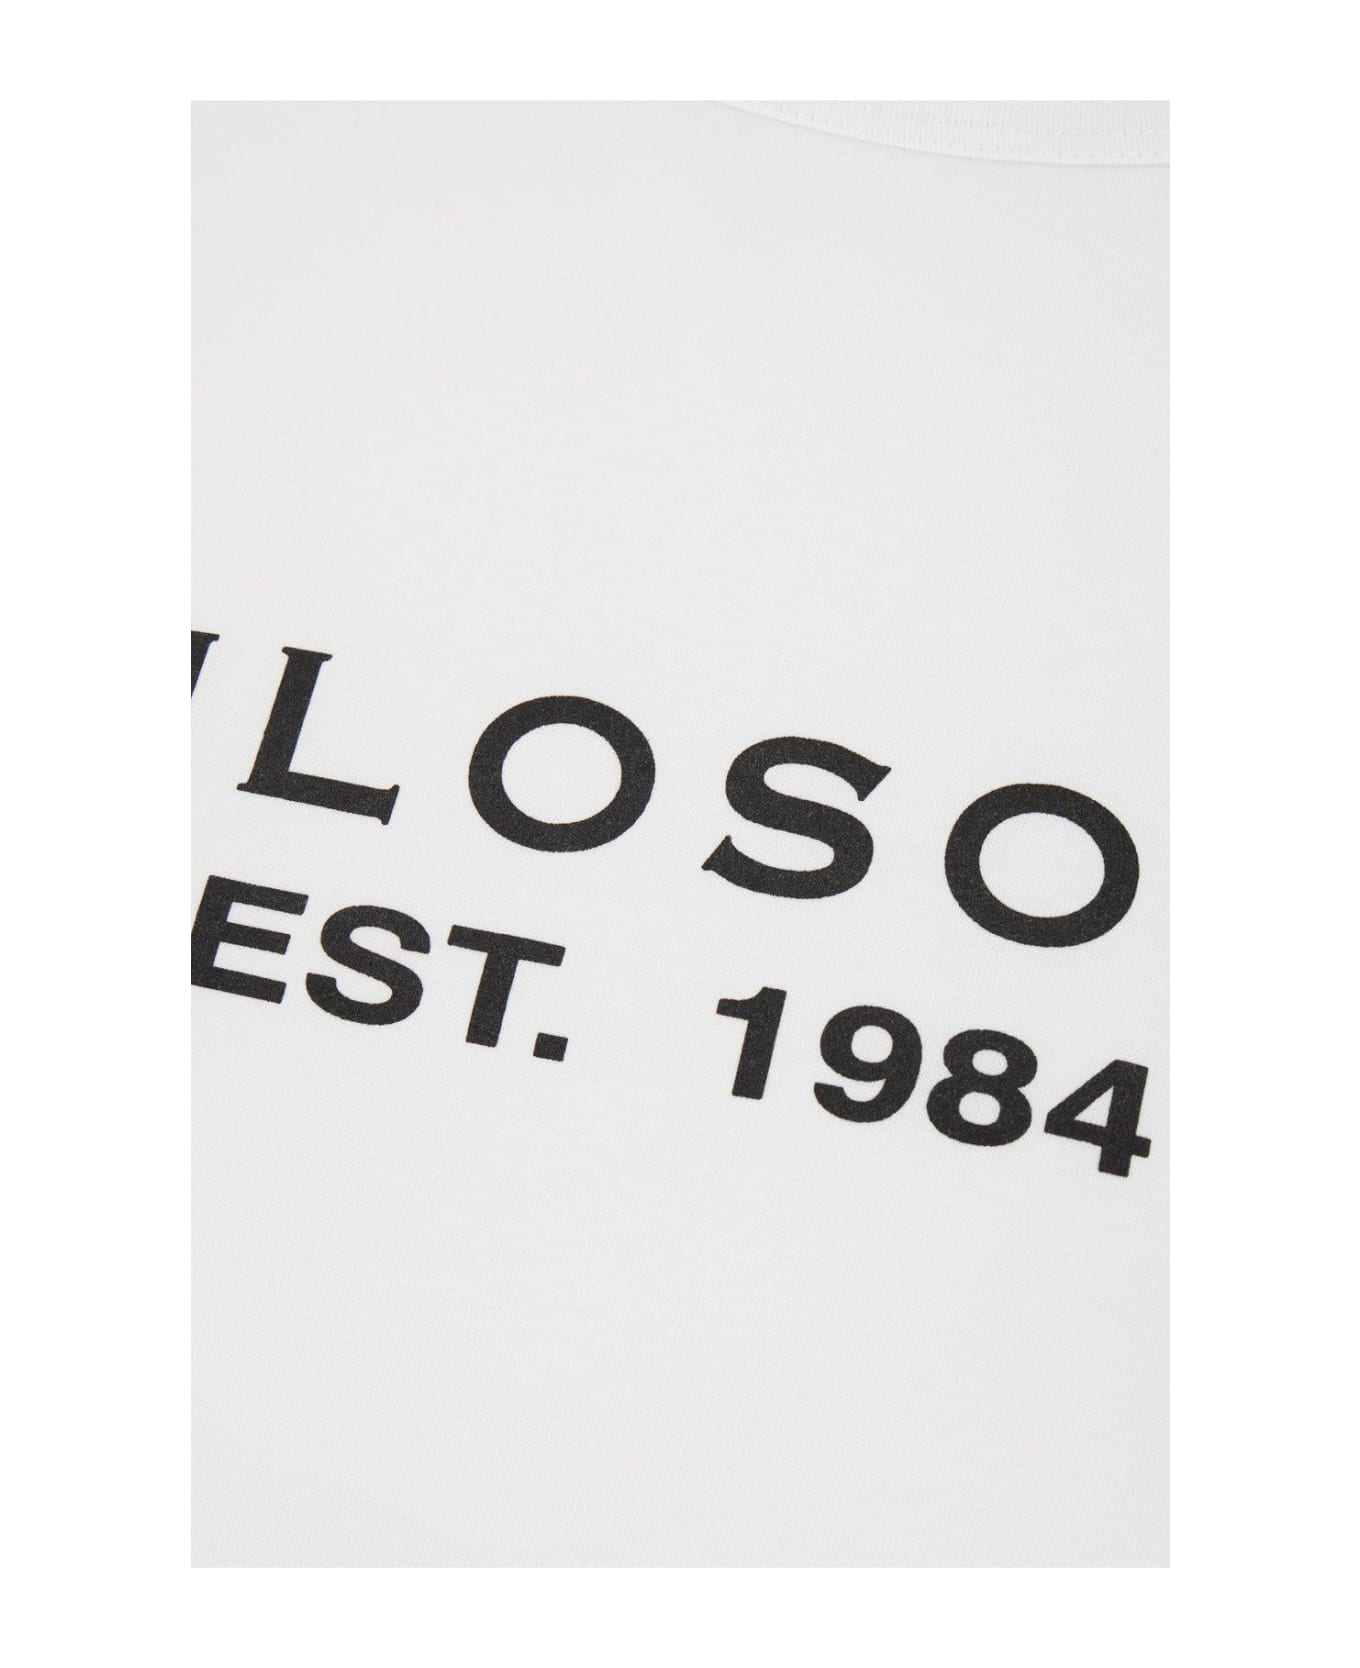 Philosophy di Lorenzo Serafini Logo Print Regular T-shirt - White